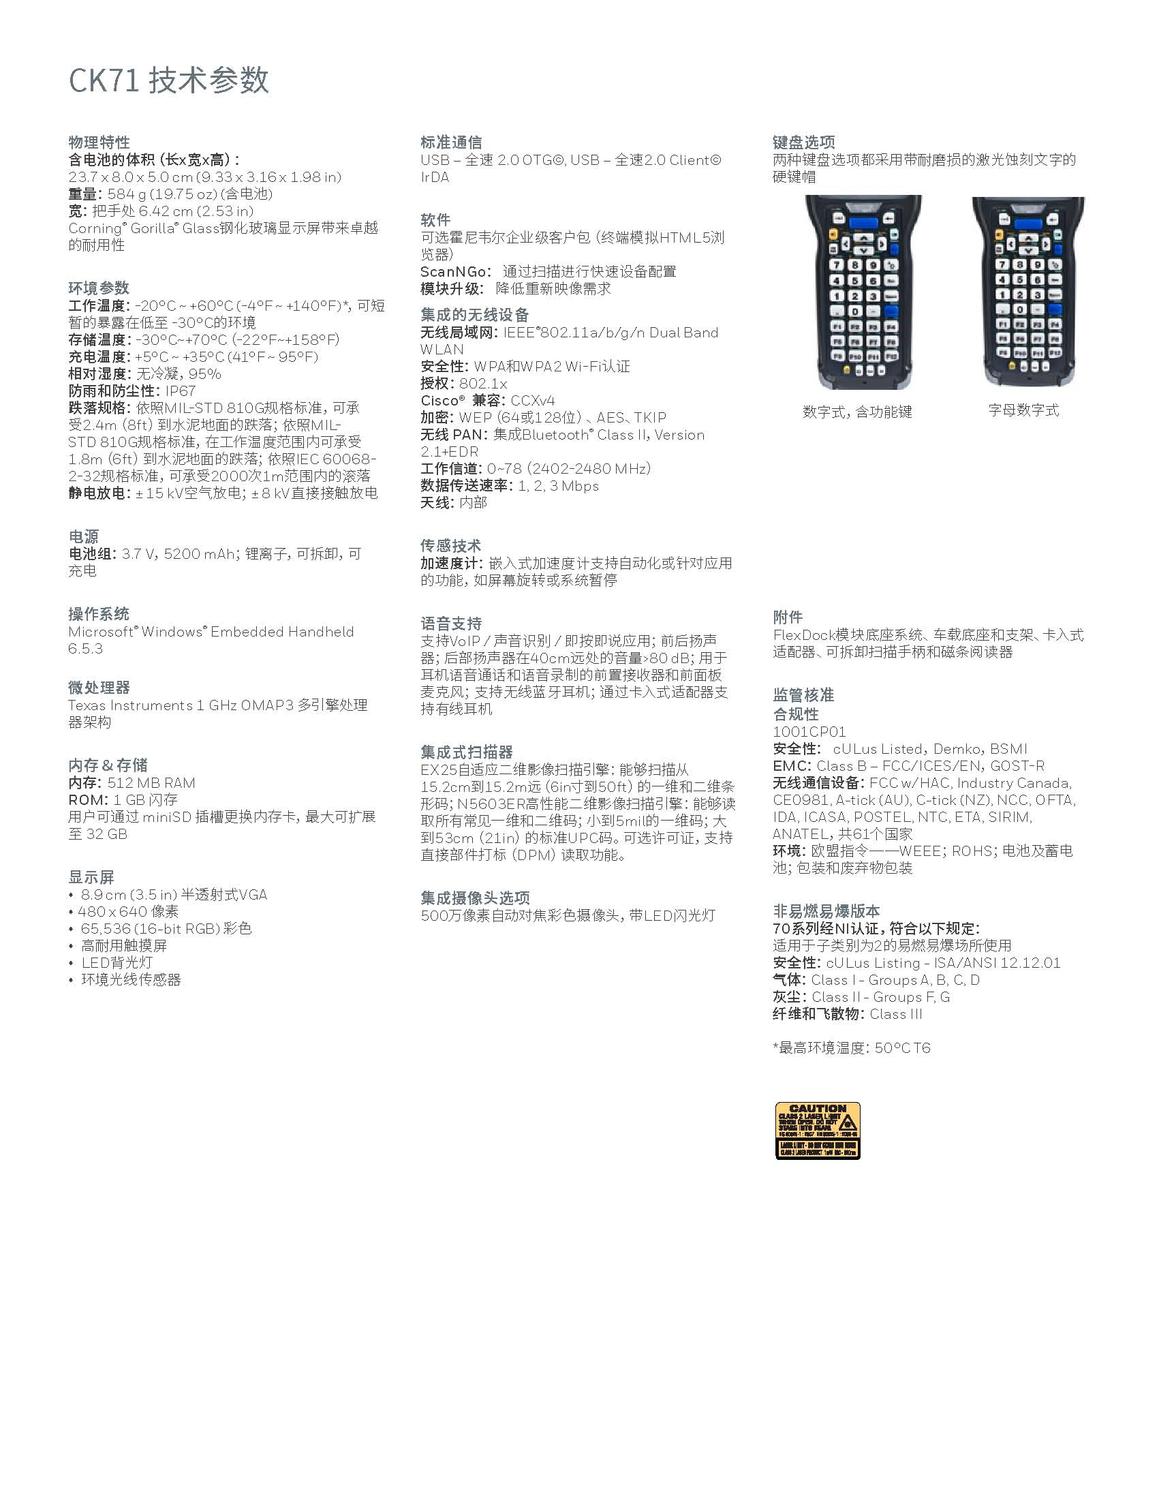 ck71-handheld-computer-data-sheet-cn_页面_2.jpg